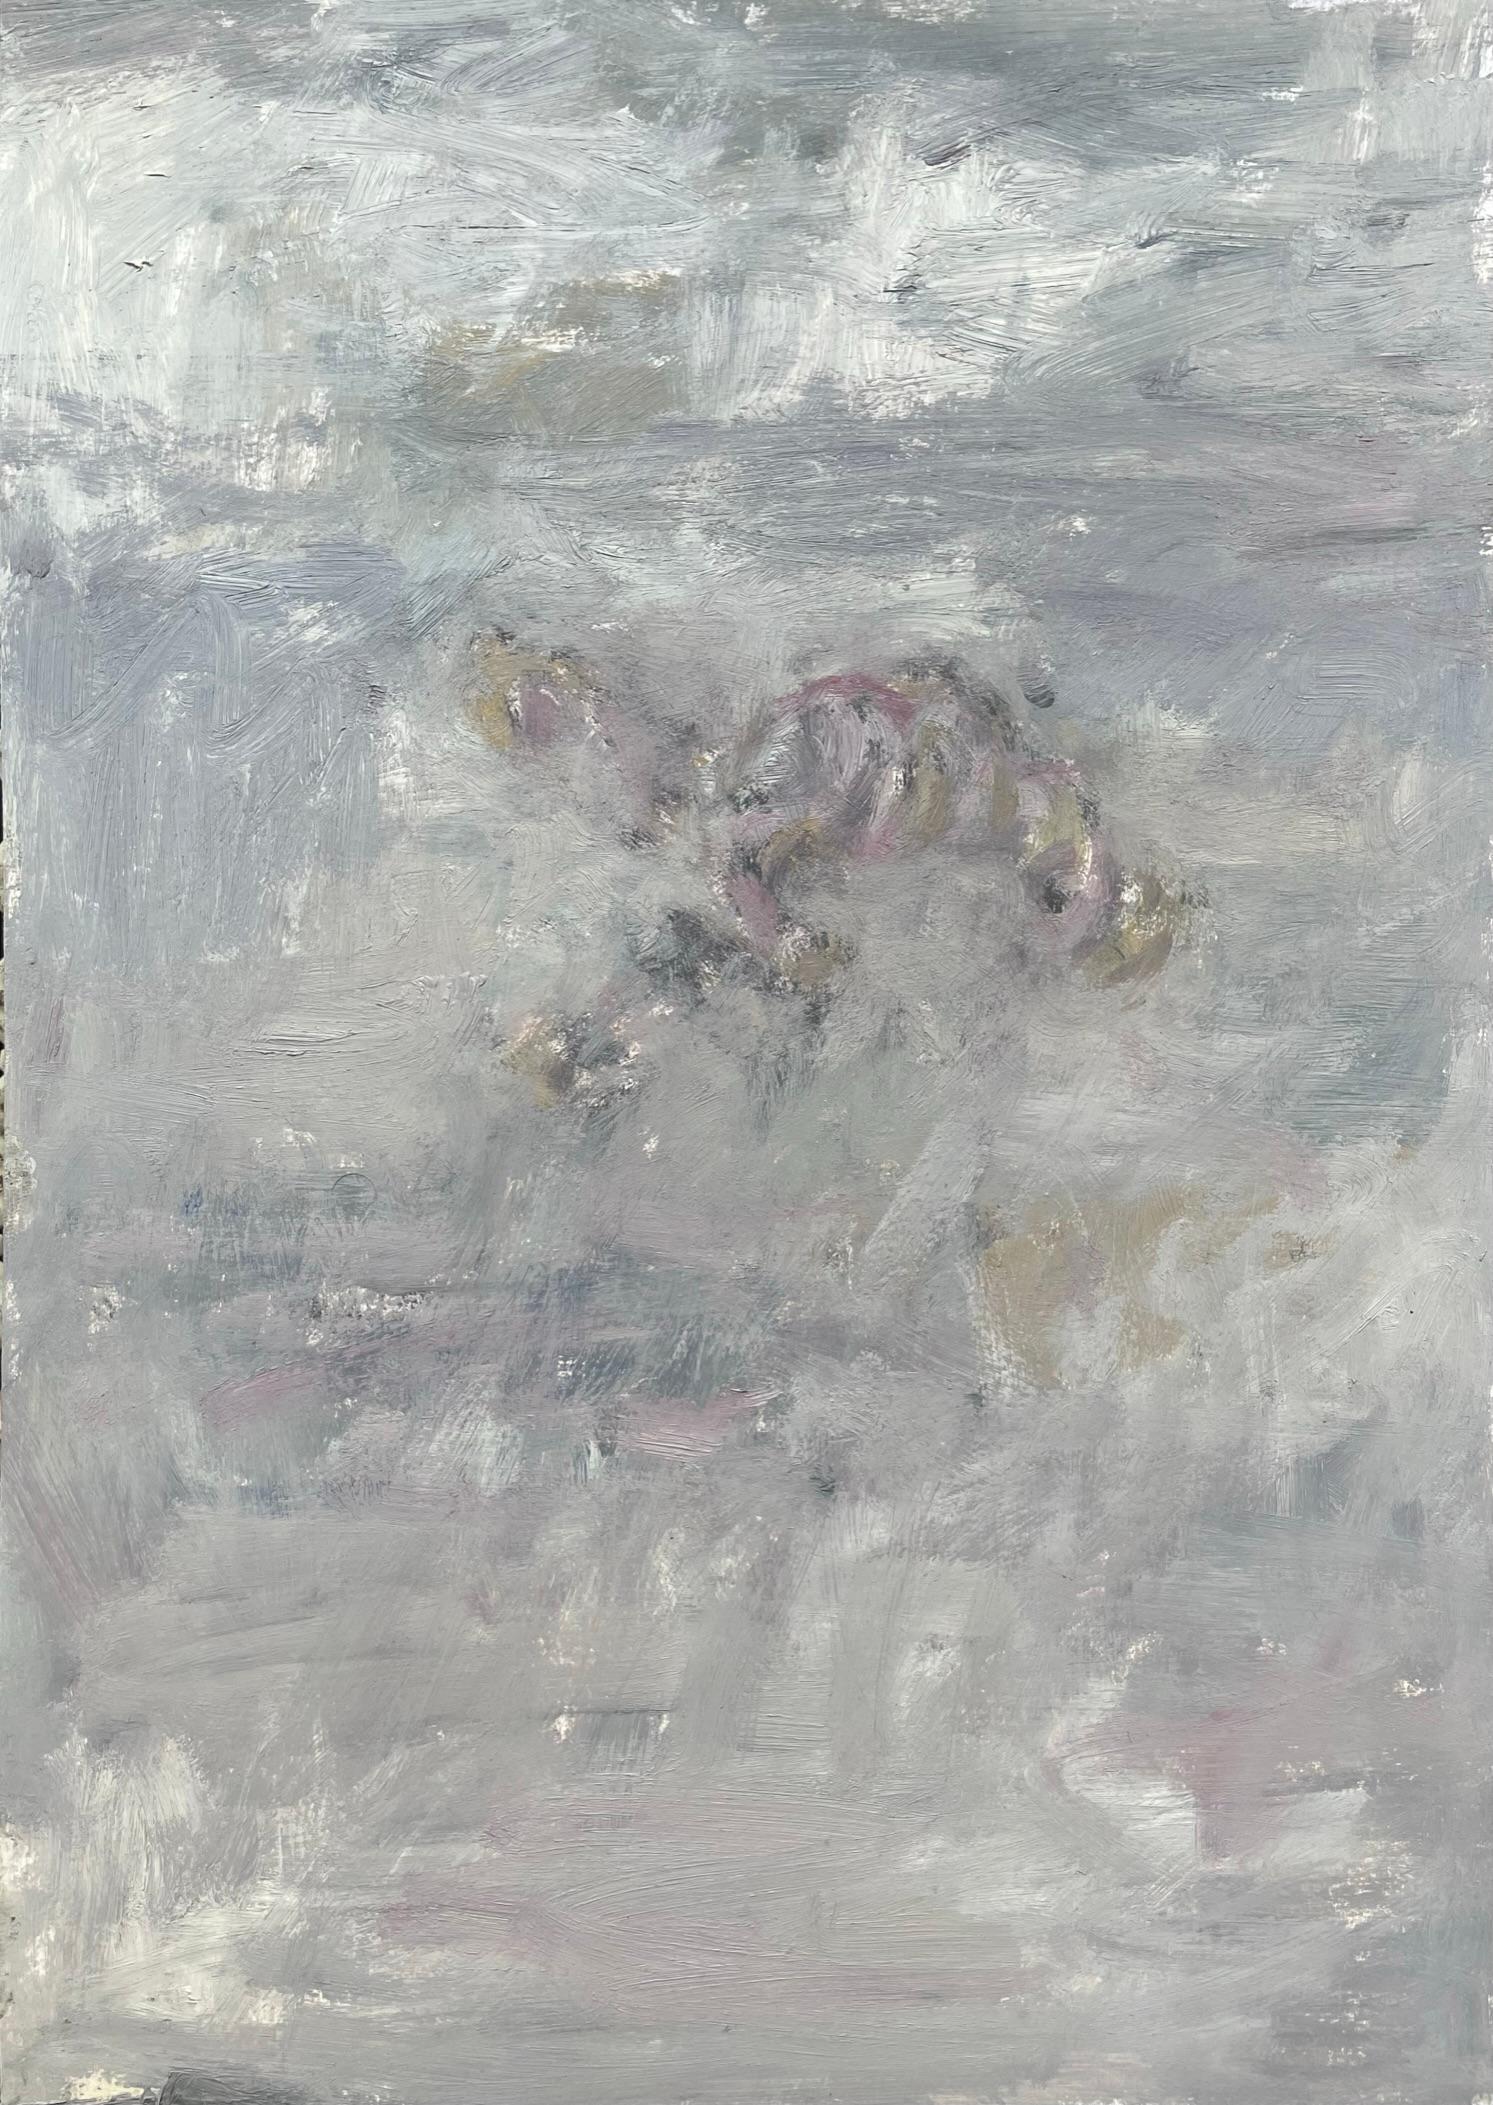 Landscape Art Zsolt Berszán - Remains (Body in the Field 16) - Contemporain, abstrait, gris, beige